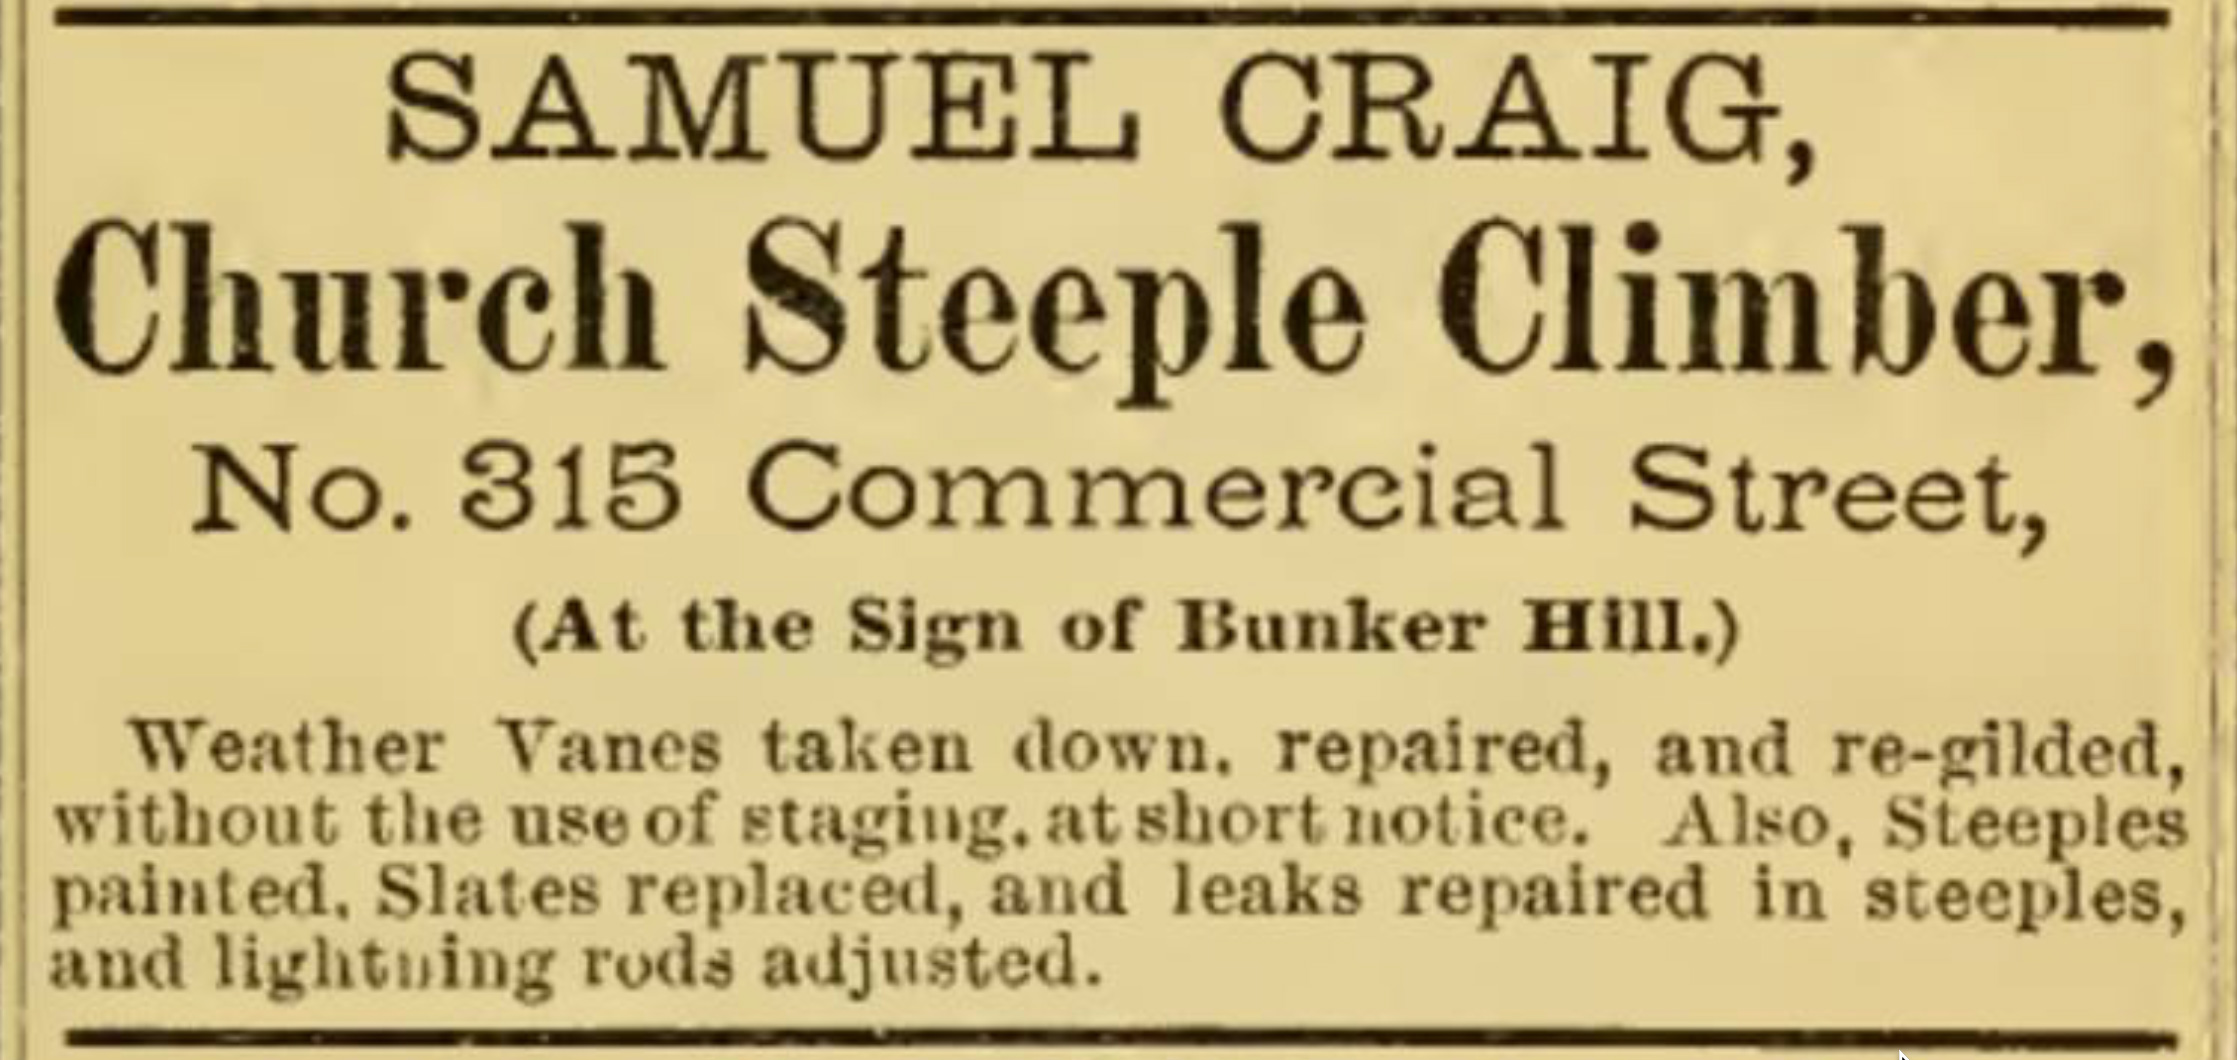 Samuel Craig, Church Steeple Climber advertisement, Boston, 1879.  